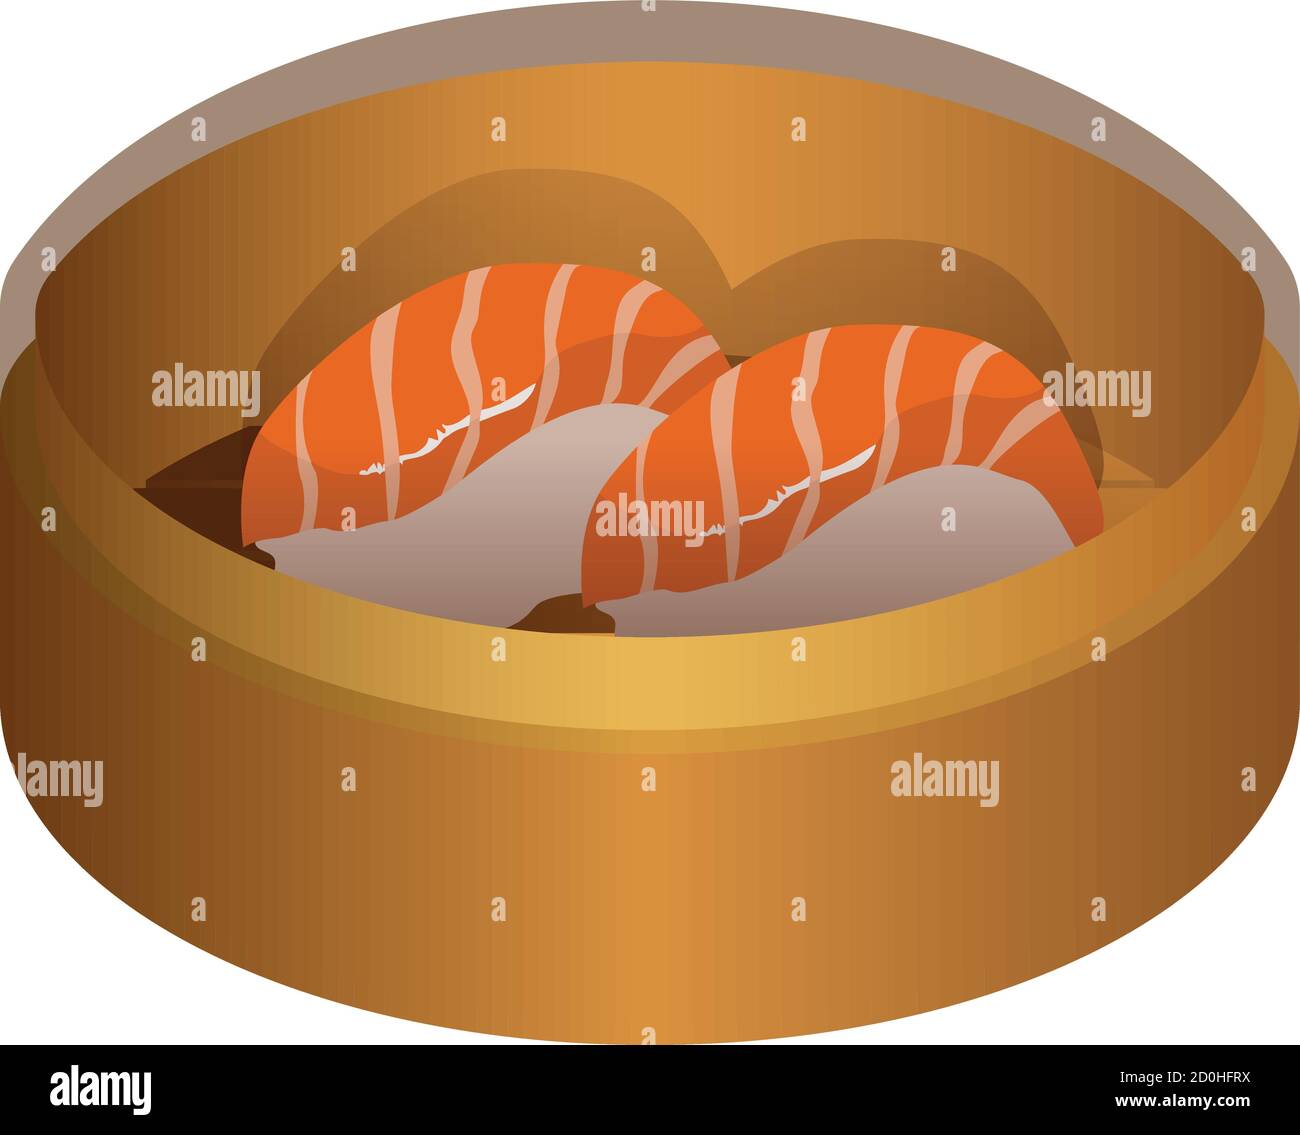 Saumon japanese food illustration on tradition asian style Stock Vector